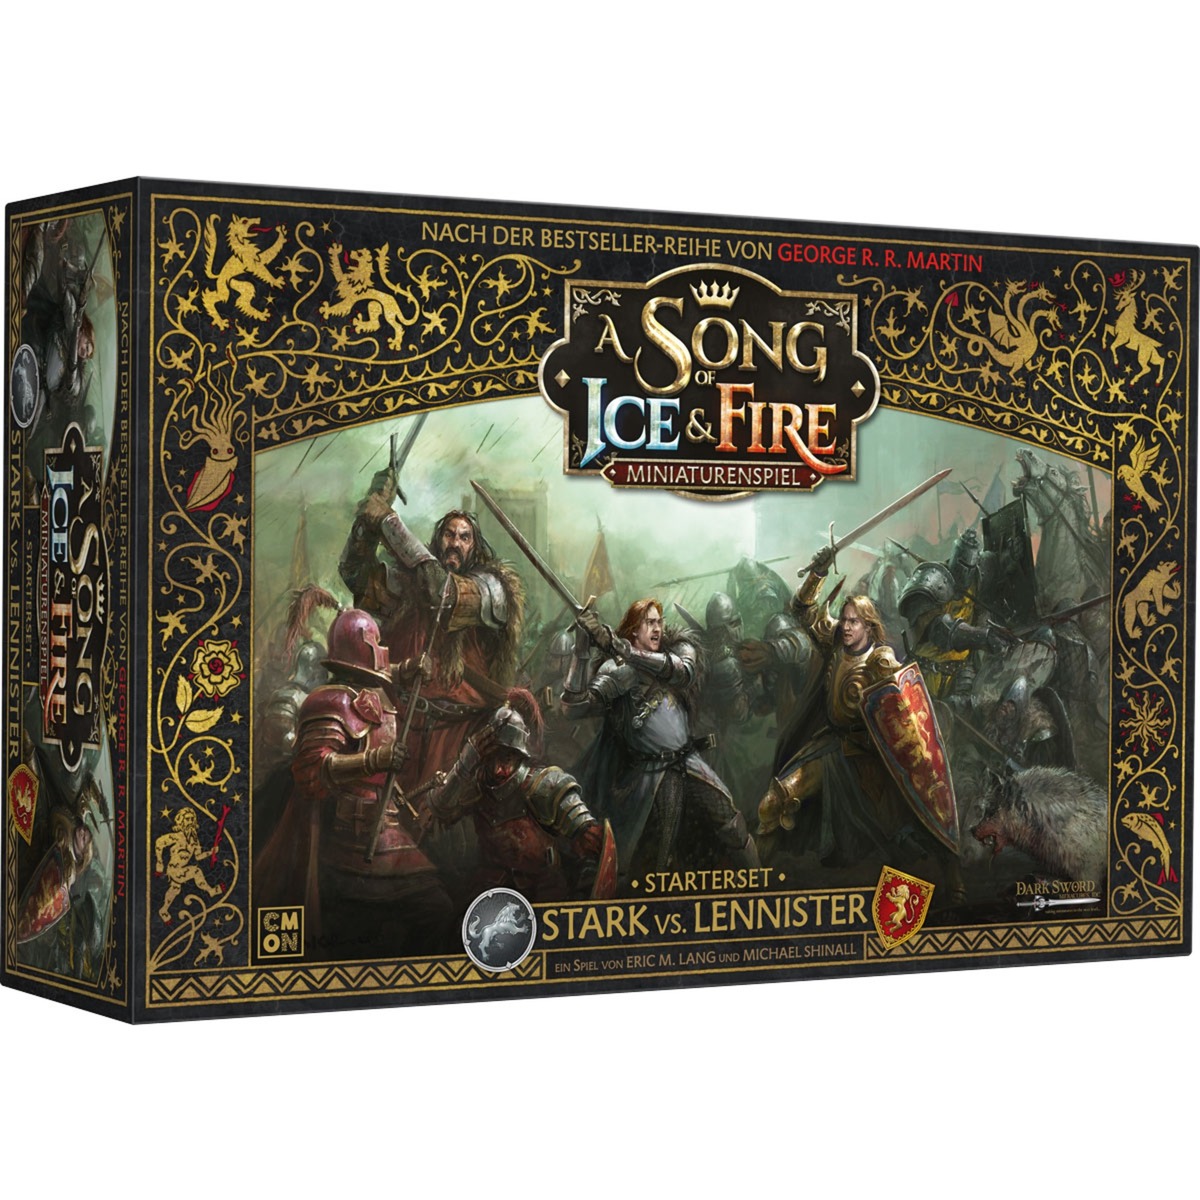 Image of Alternate - A Song of Ice and Fire: Miniaturenspiel - Stark vs. Lennister, Tabletop online einkaufen bei Alternate